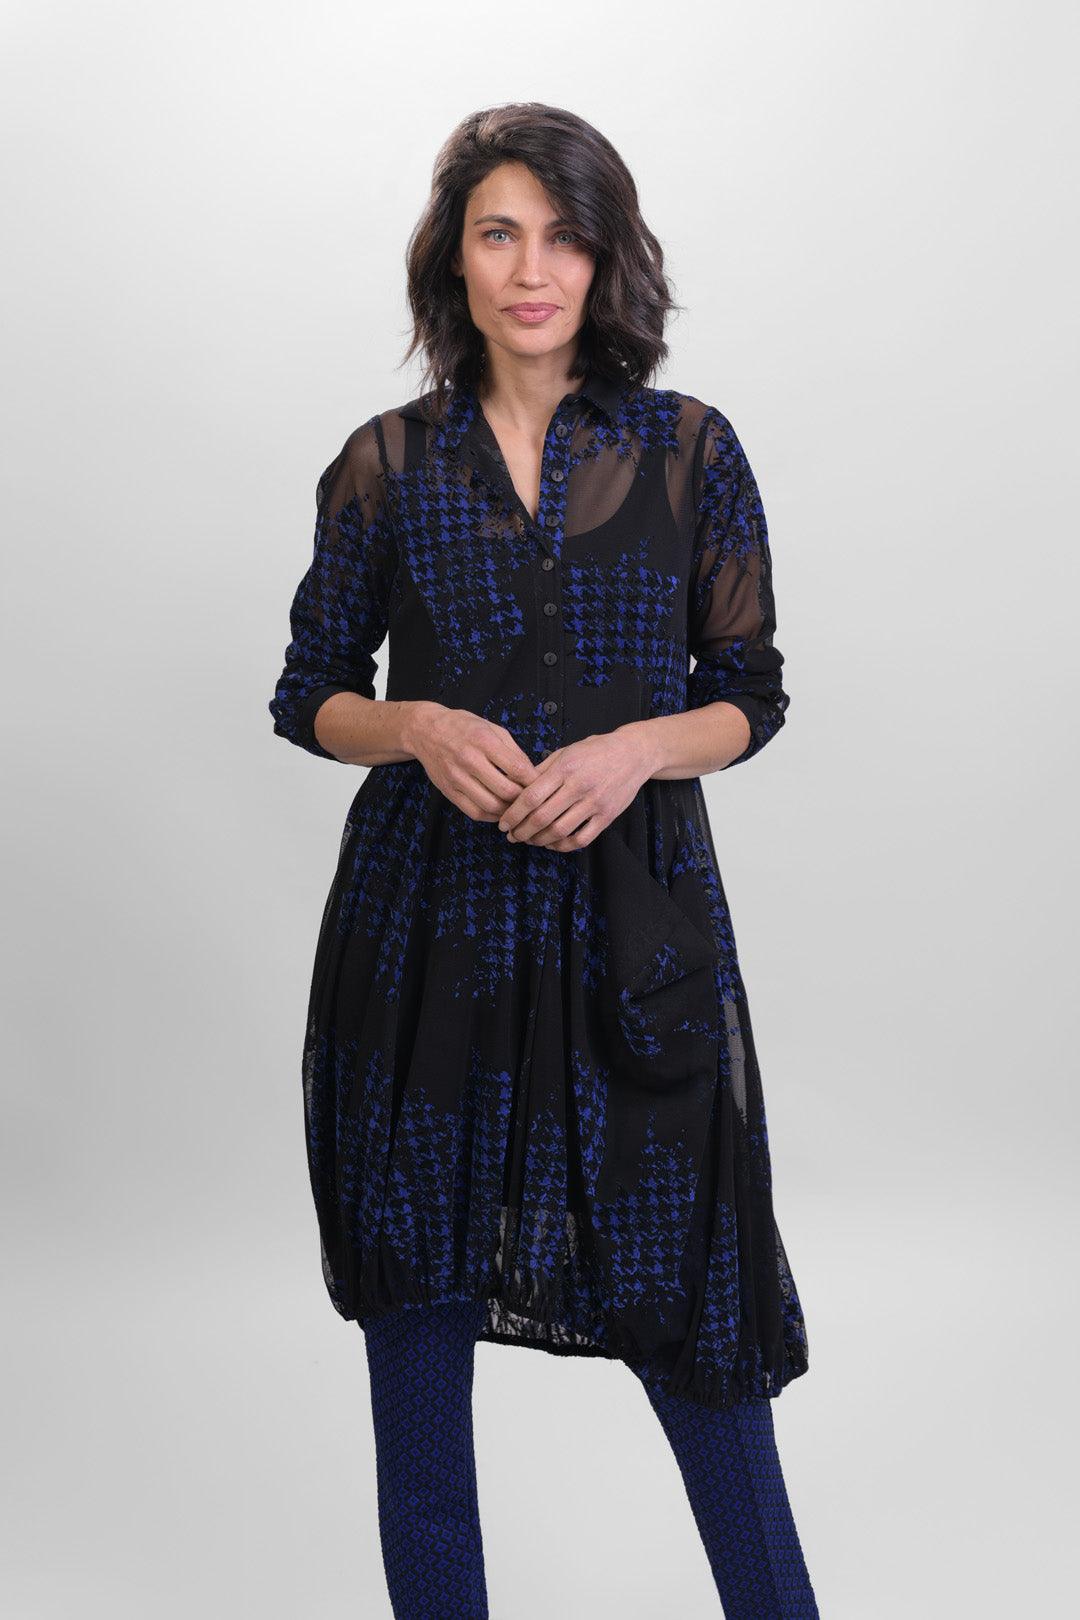 Floral Check Wonderful Dress, Blue - Alembika Designer Women's Clothing